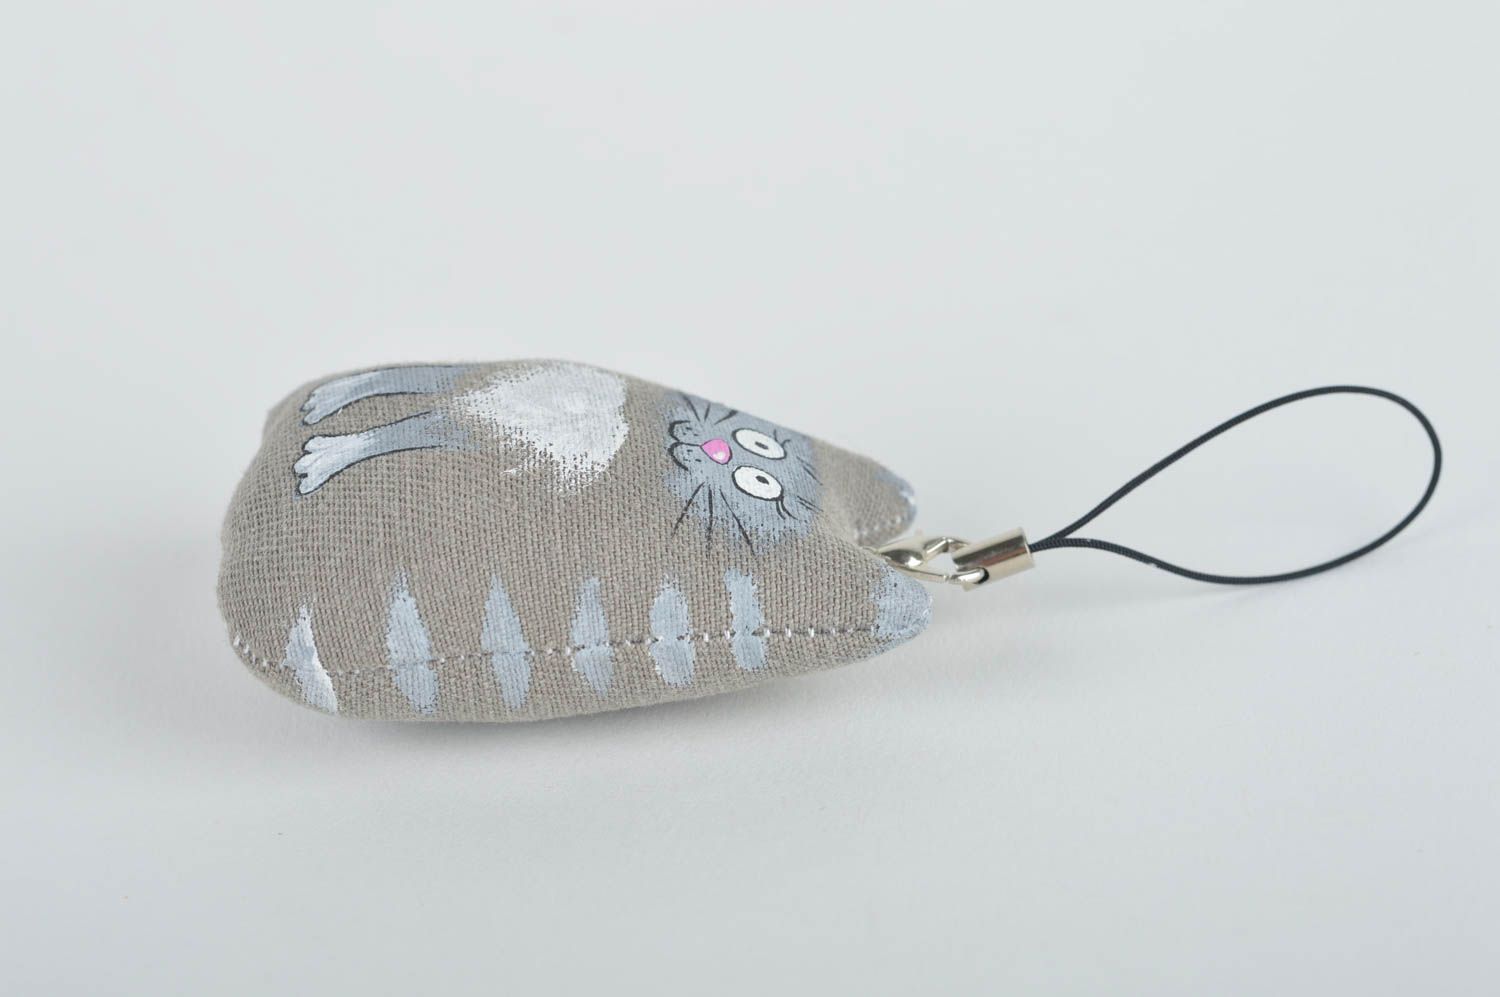 Popular handmade soft keychain stuffed soft toy fabric phone charm gift ideas photo 3